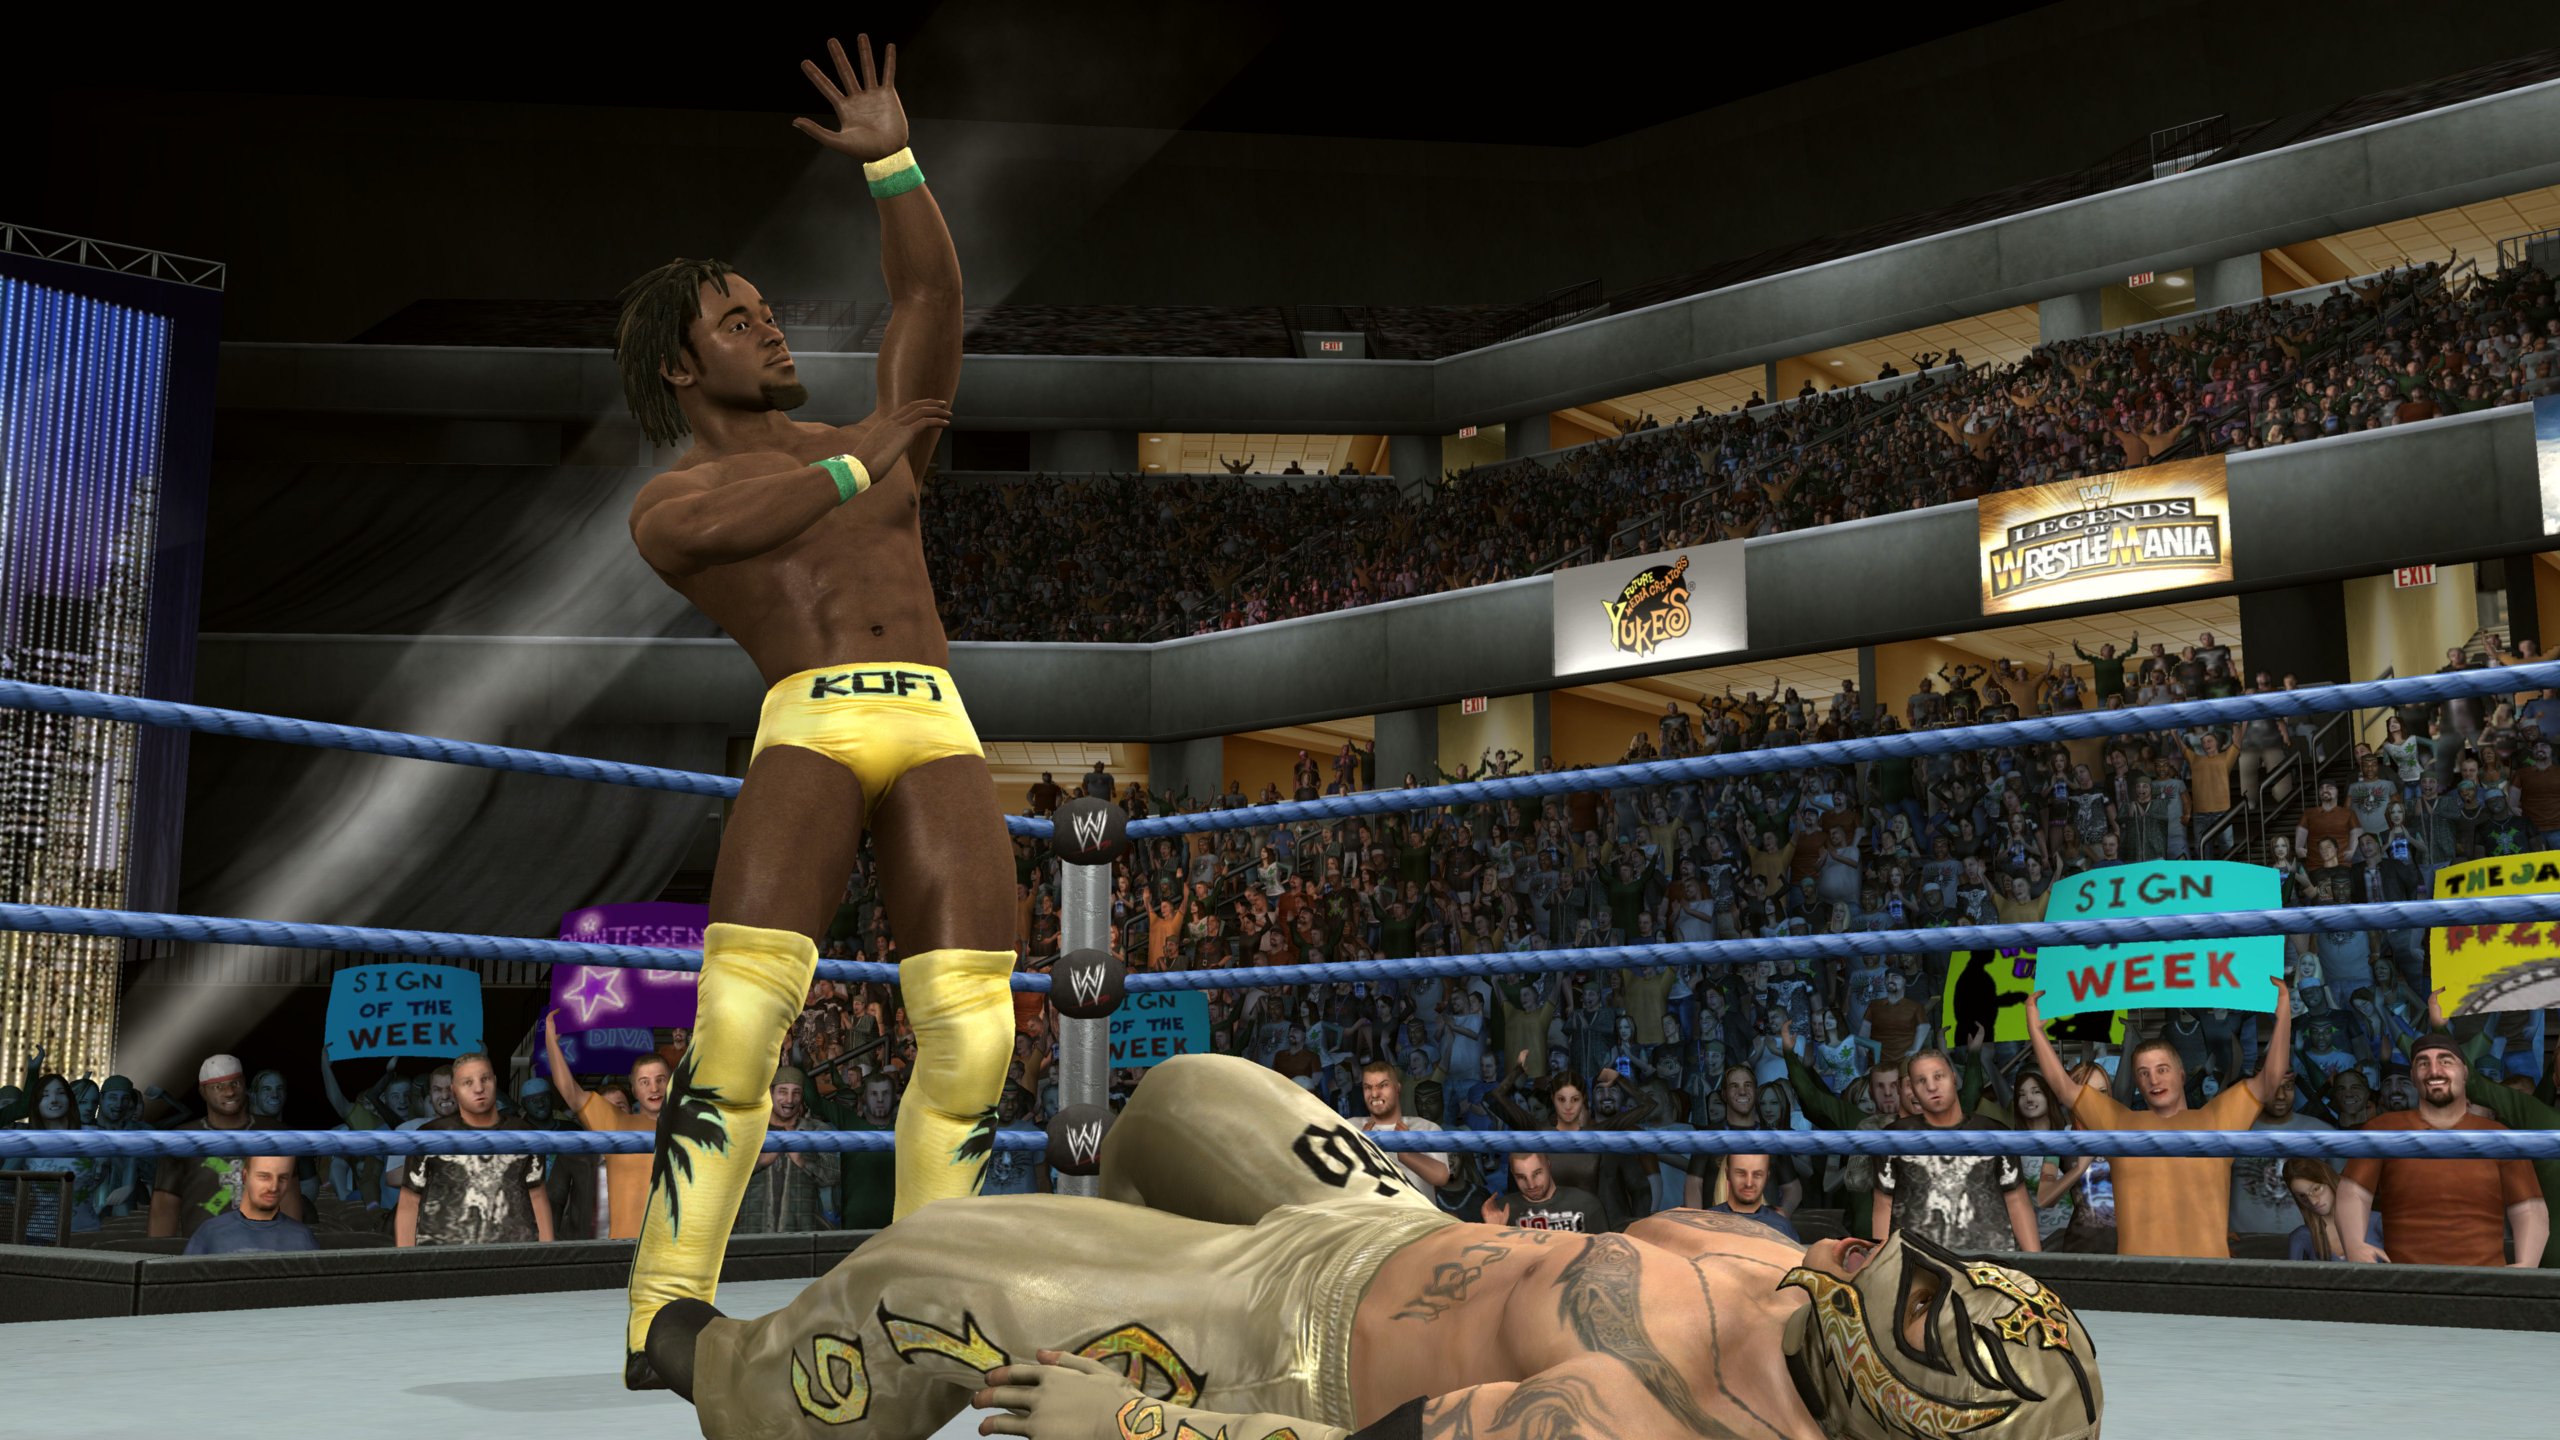 WWE SmackDown vs. Raw 2010 - Playstation 3